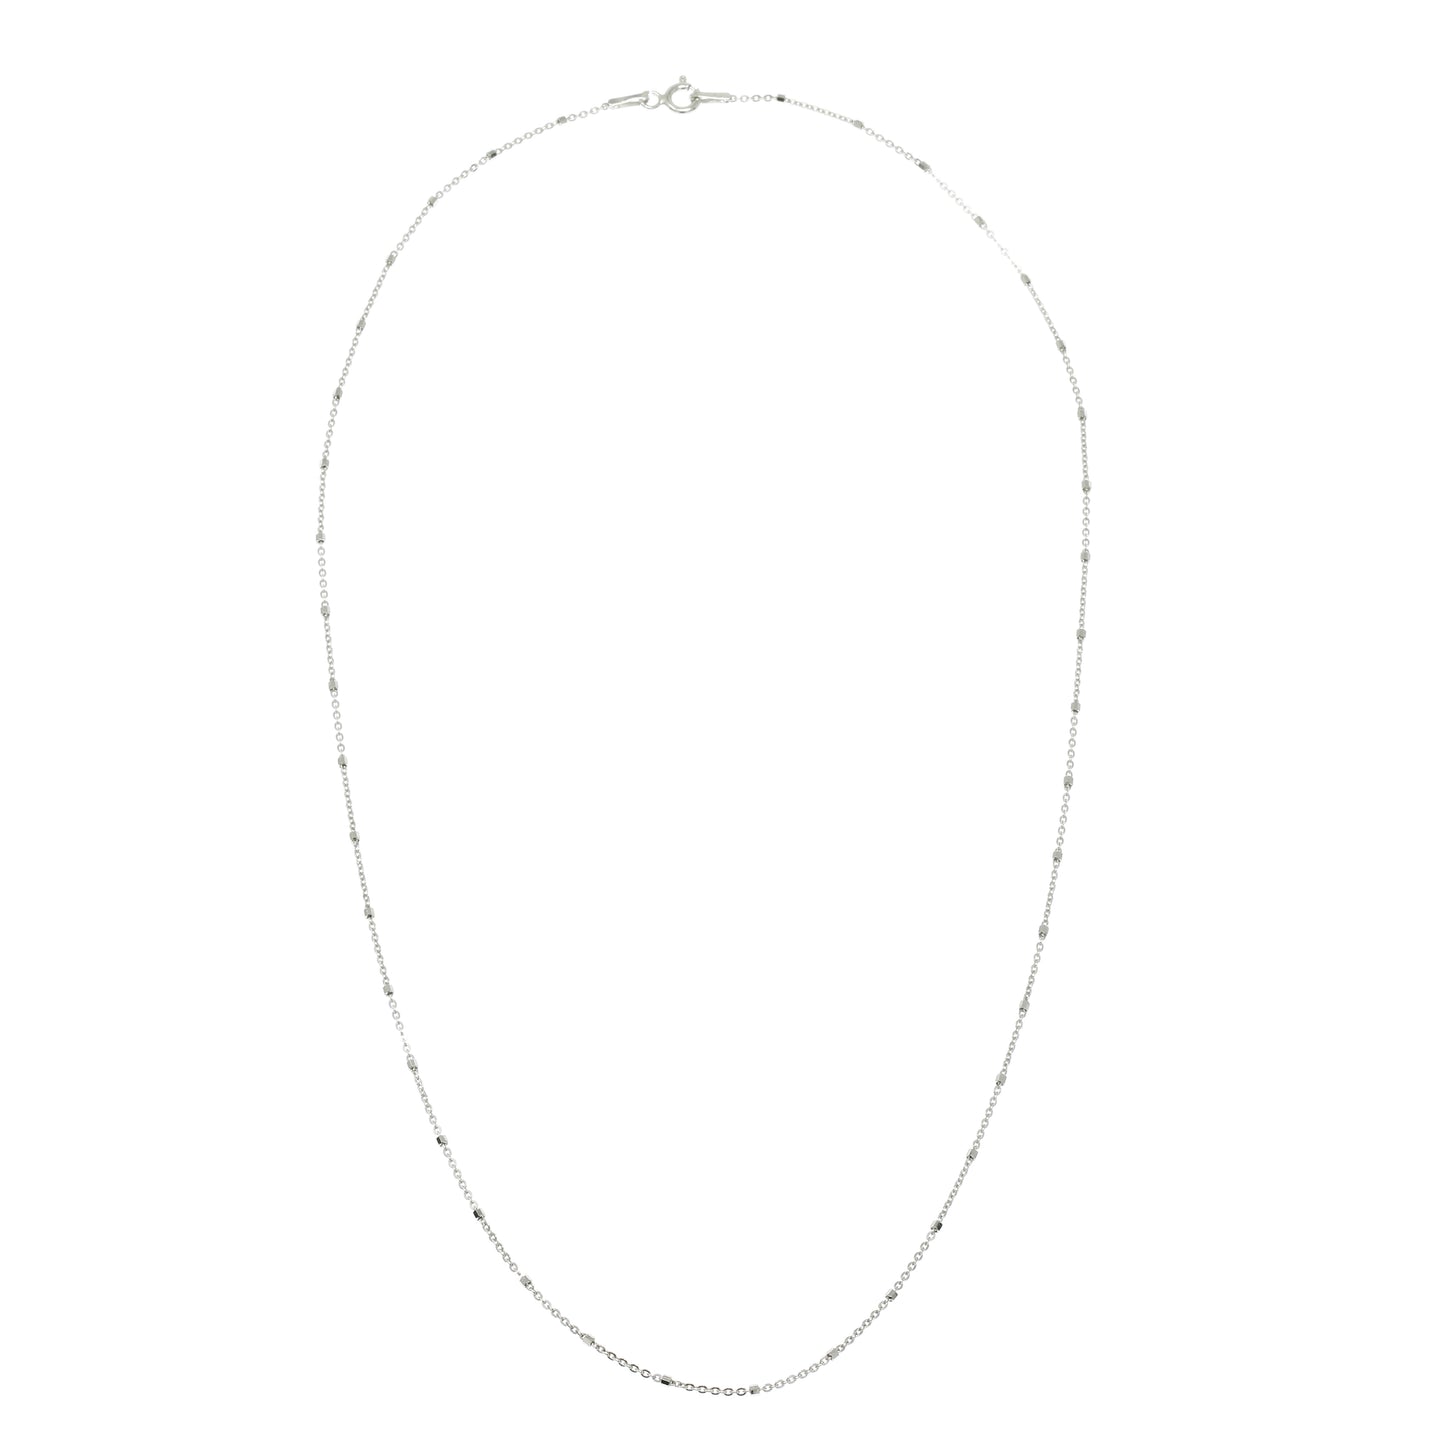 NA-18/S - Decorative Chain Necklace